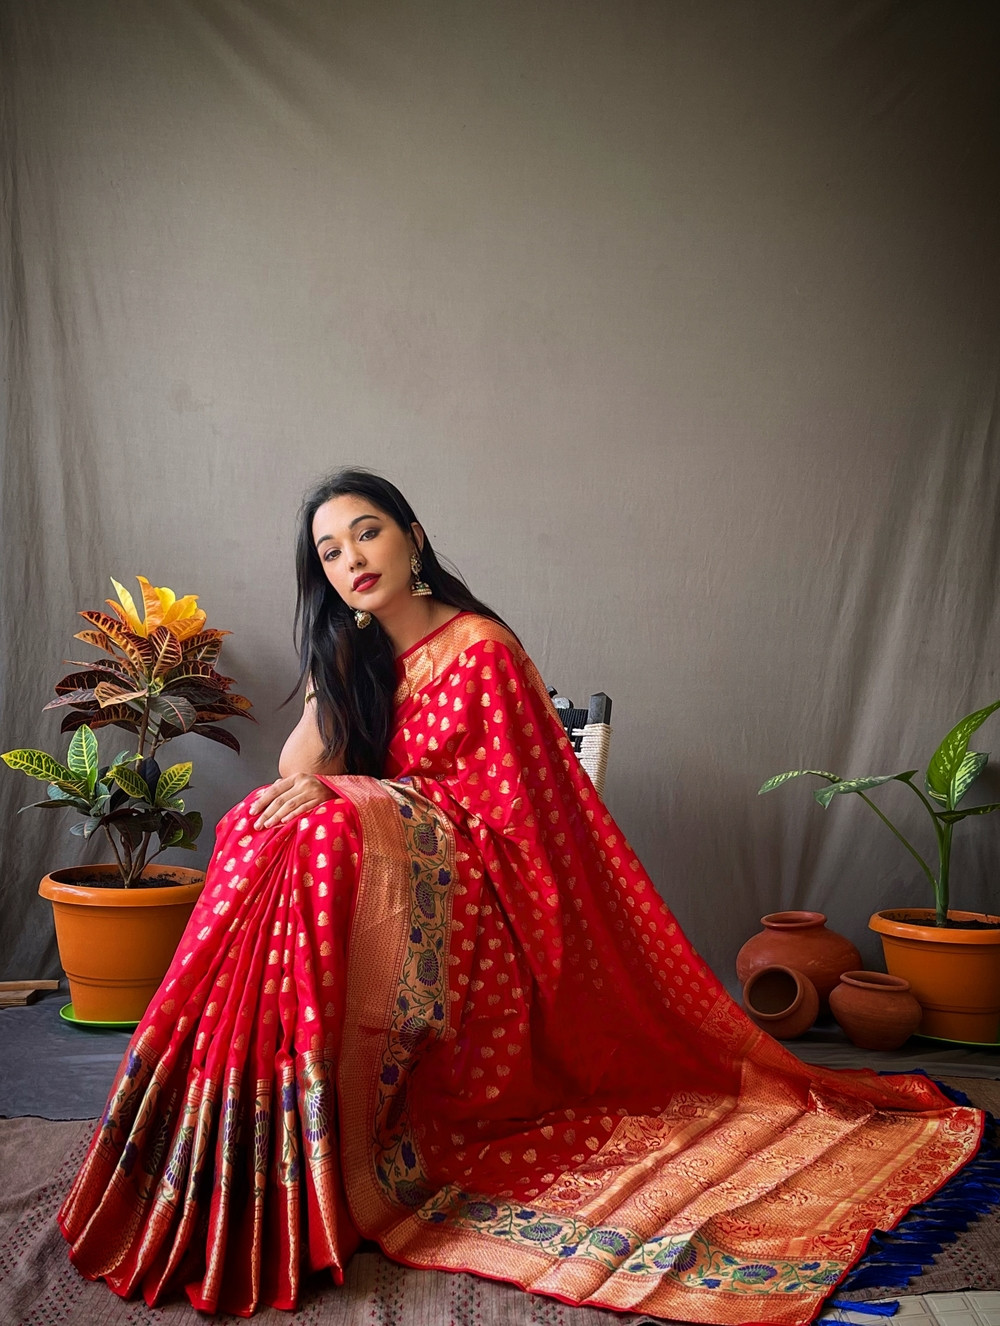 Banarasi silk saree with gold zari Woven border and Pallu - Red